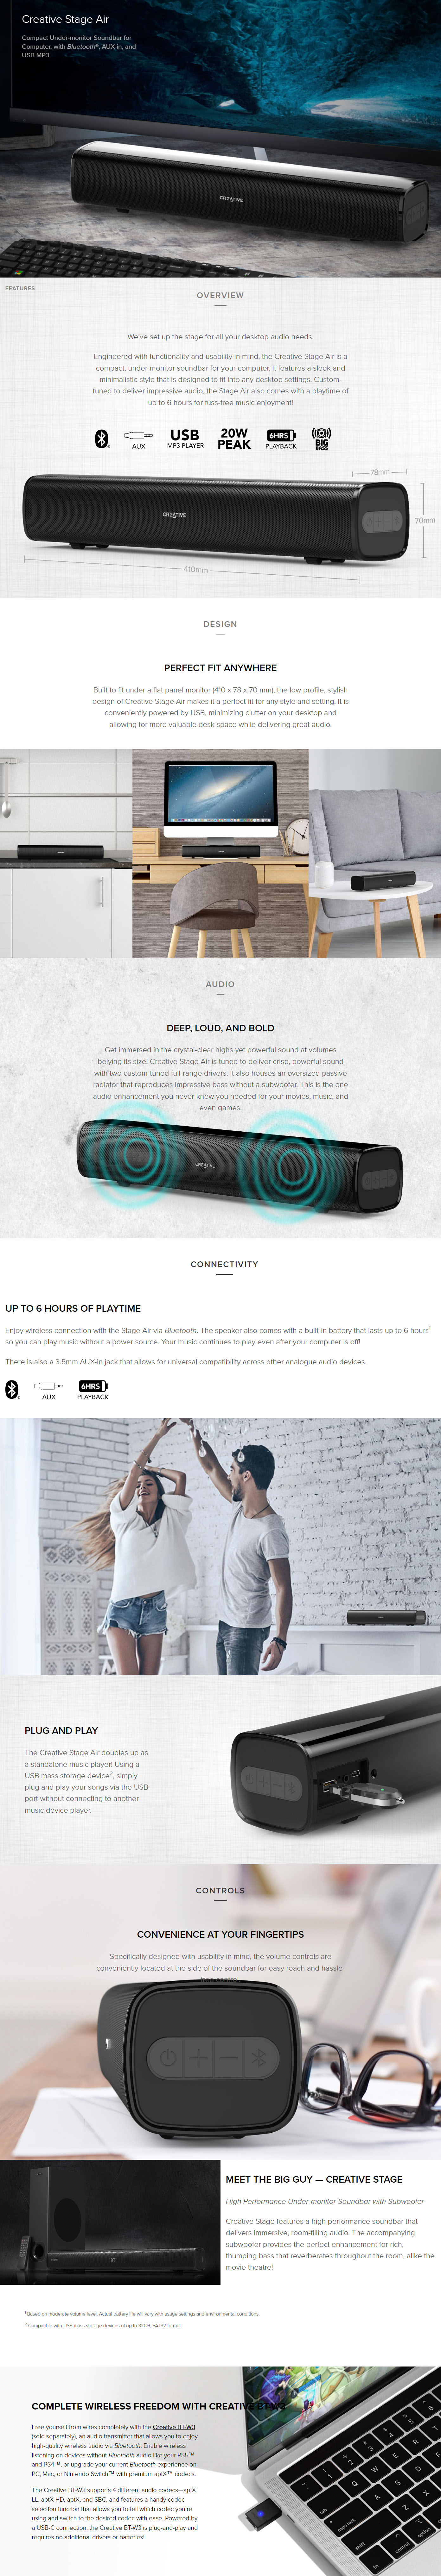 Speakers-Creative-Stage-AIR-Bluetooth-Under-Monitor-Soundbar-Black-1